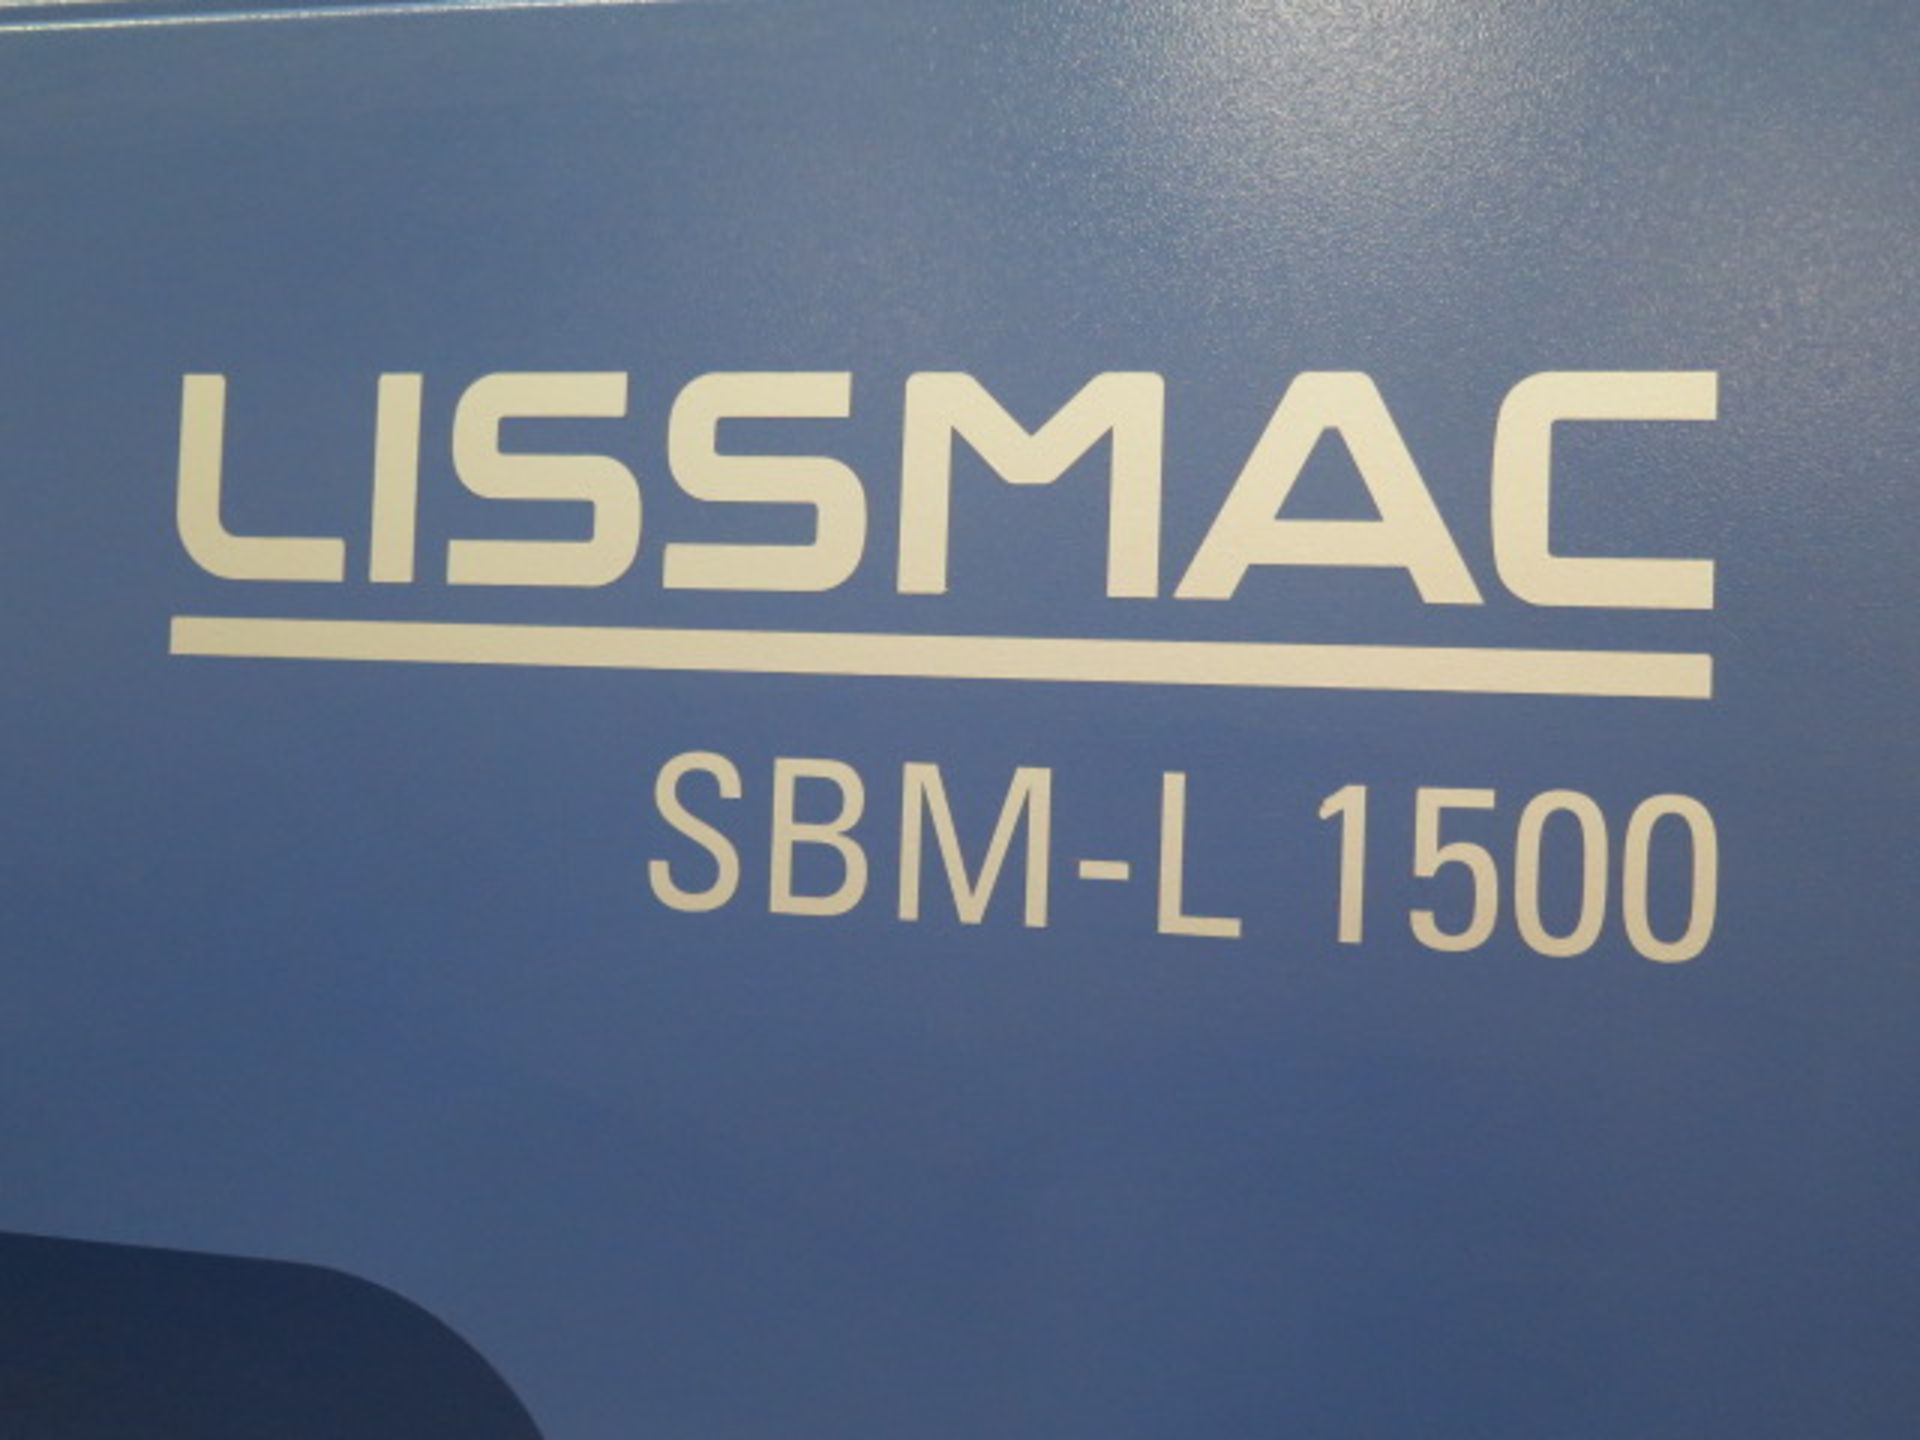 2015 Lissmac SBM-L1500 G1S2-60 2-Sided Deburring and Edge Rounding Machine s/n 004475, SOLD AS IS - Bild 3 aus 22